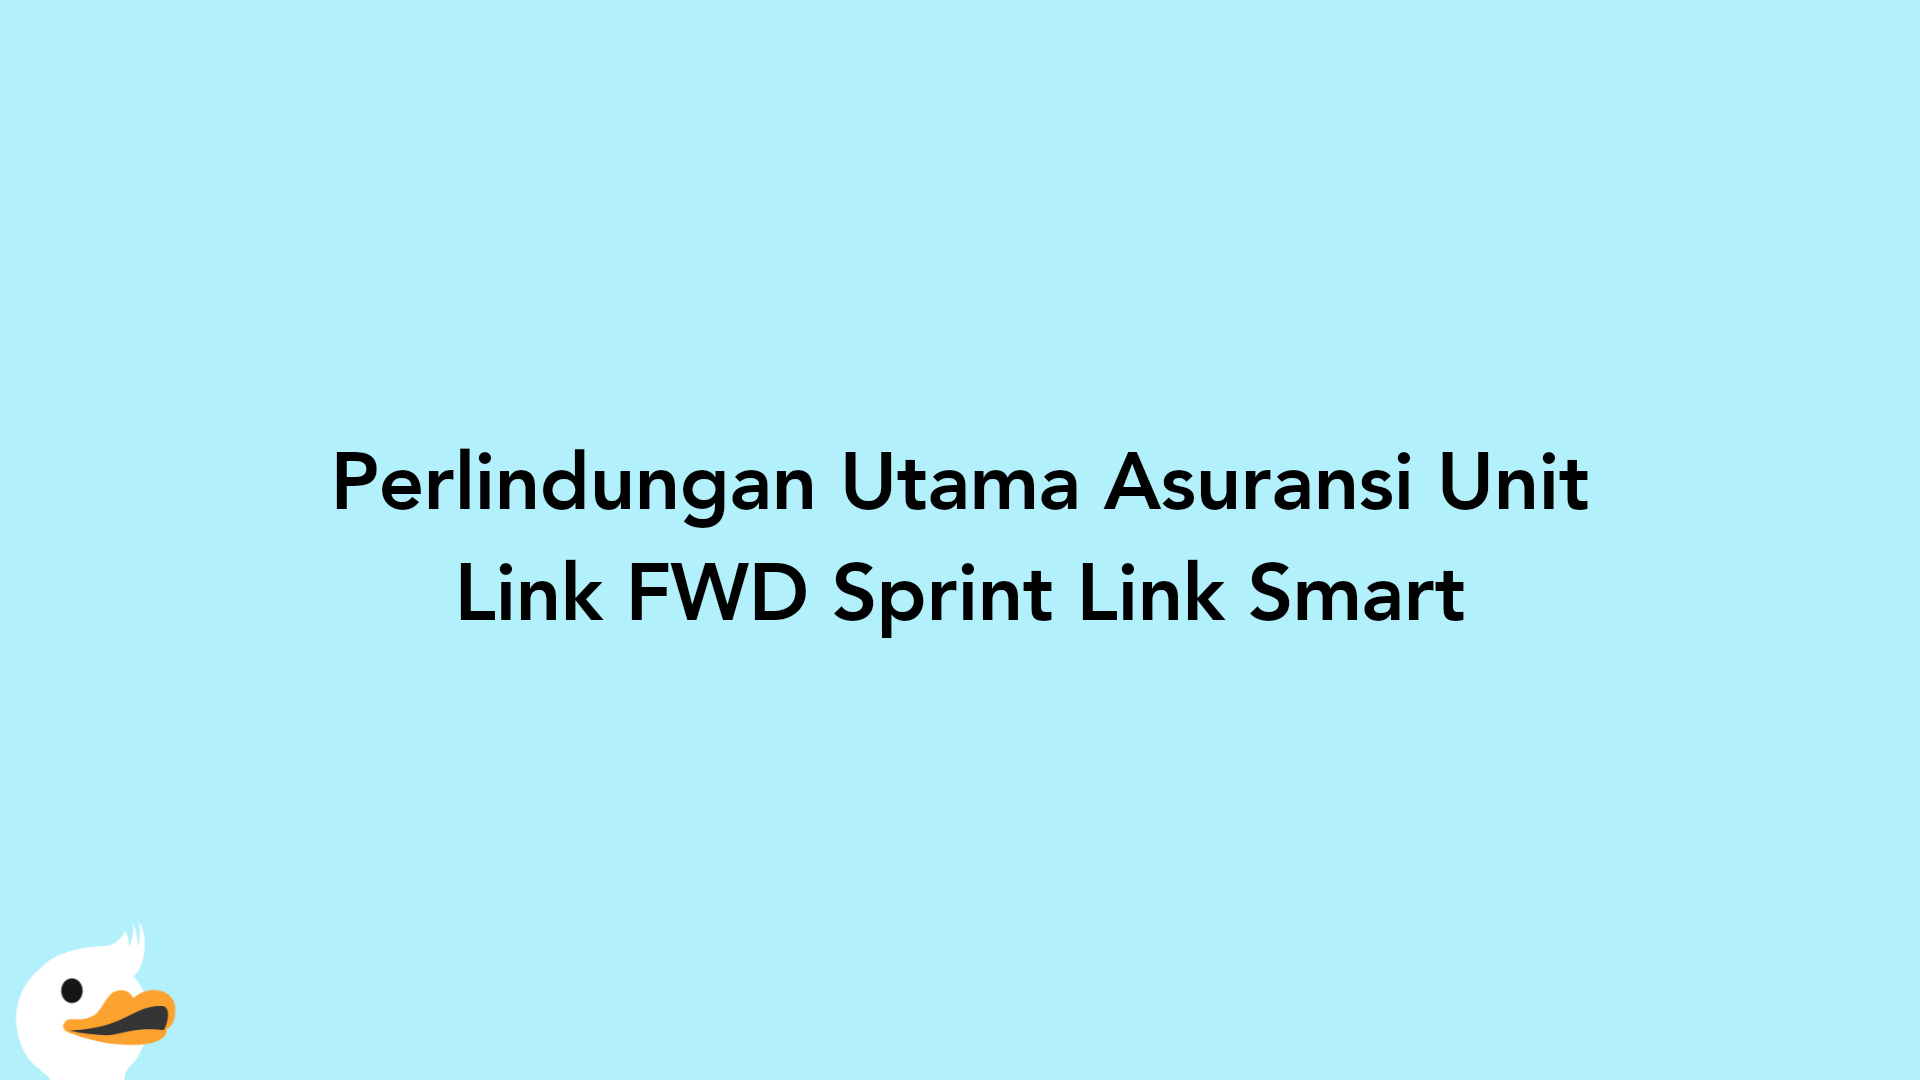 Perlindungan Utama Asuransi Unit Link FWD Sprint Link Smart